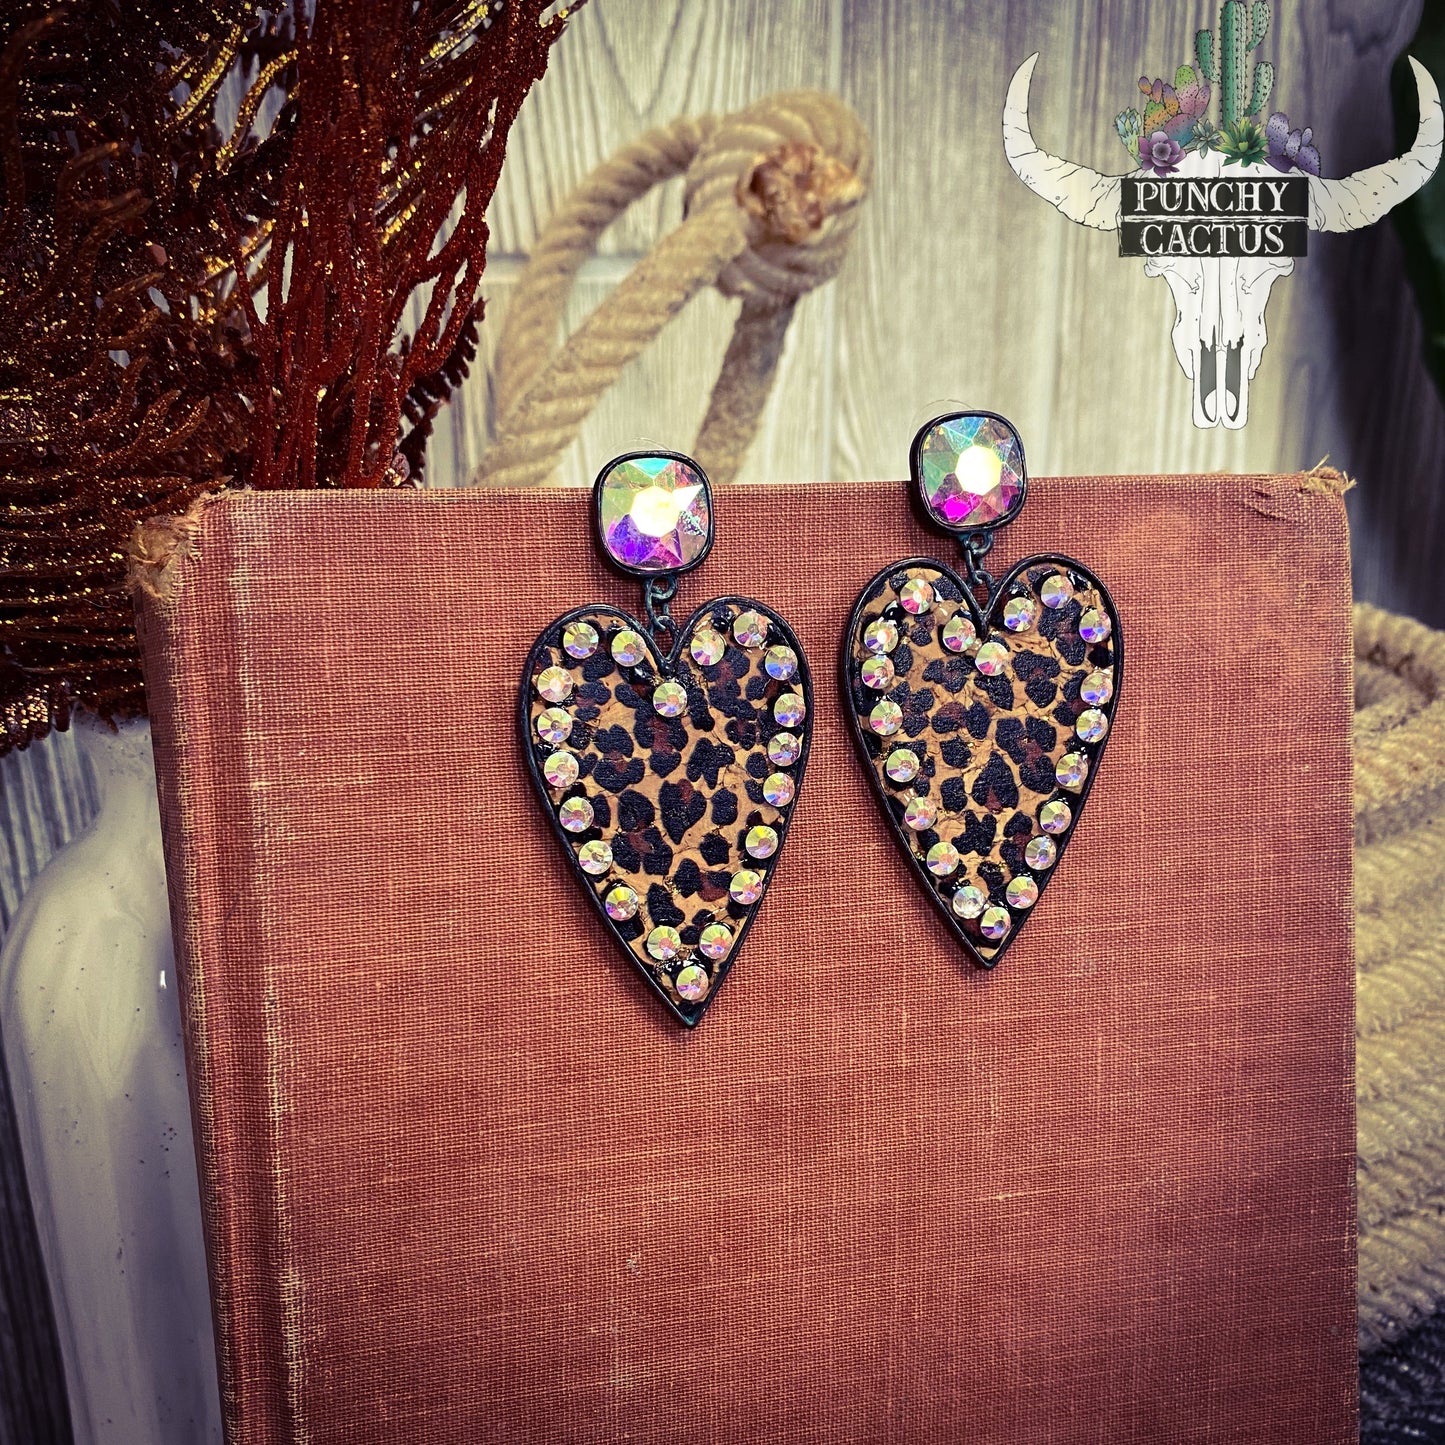 black heart shaped earrings with cheetah print center and rhinestone edge 